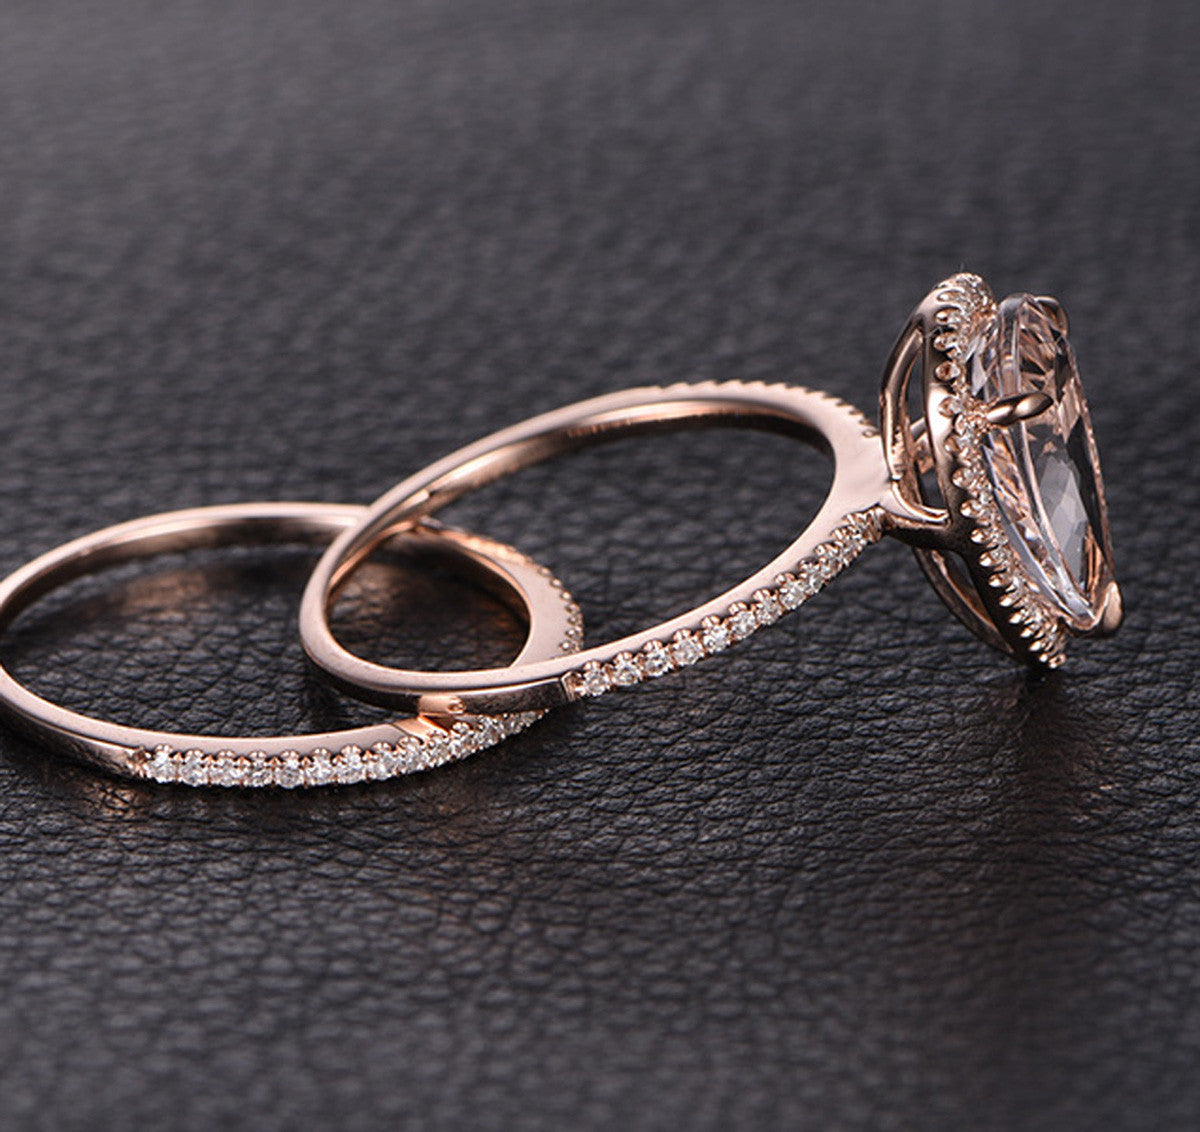 Pear Morganite Engagement Ring Sets Pave Diamond Wedding 14K Rose Gold 8x12mm - Lord of Gem Rings - 2